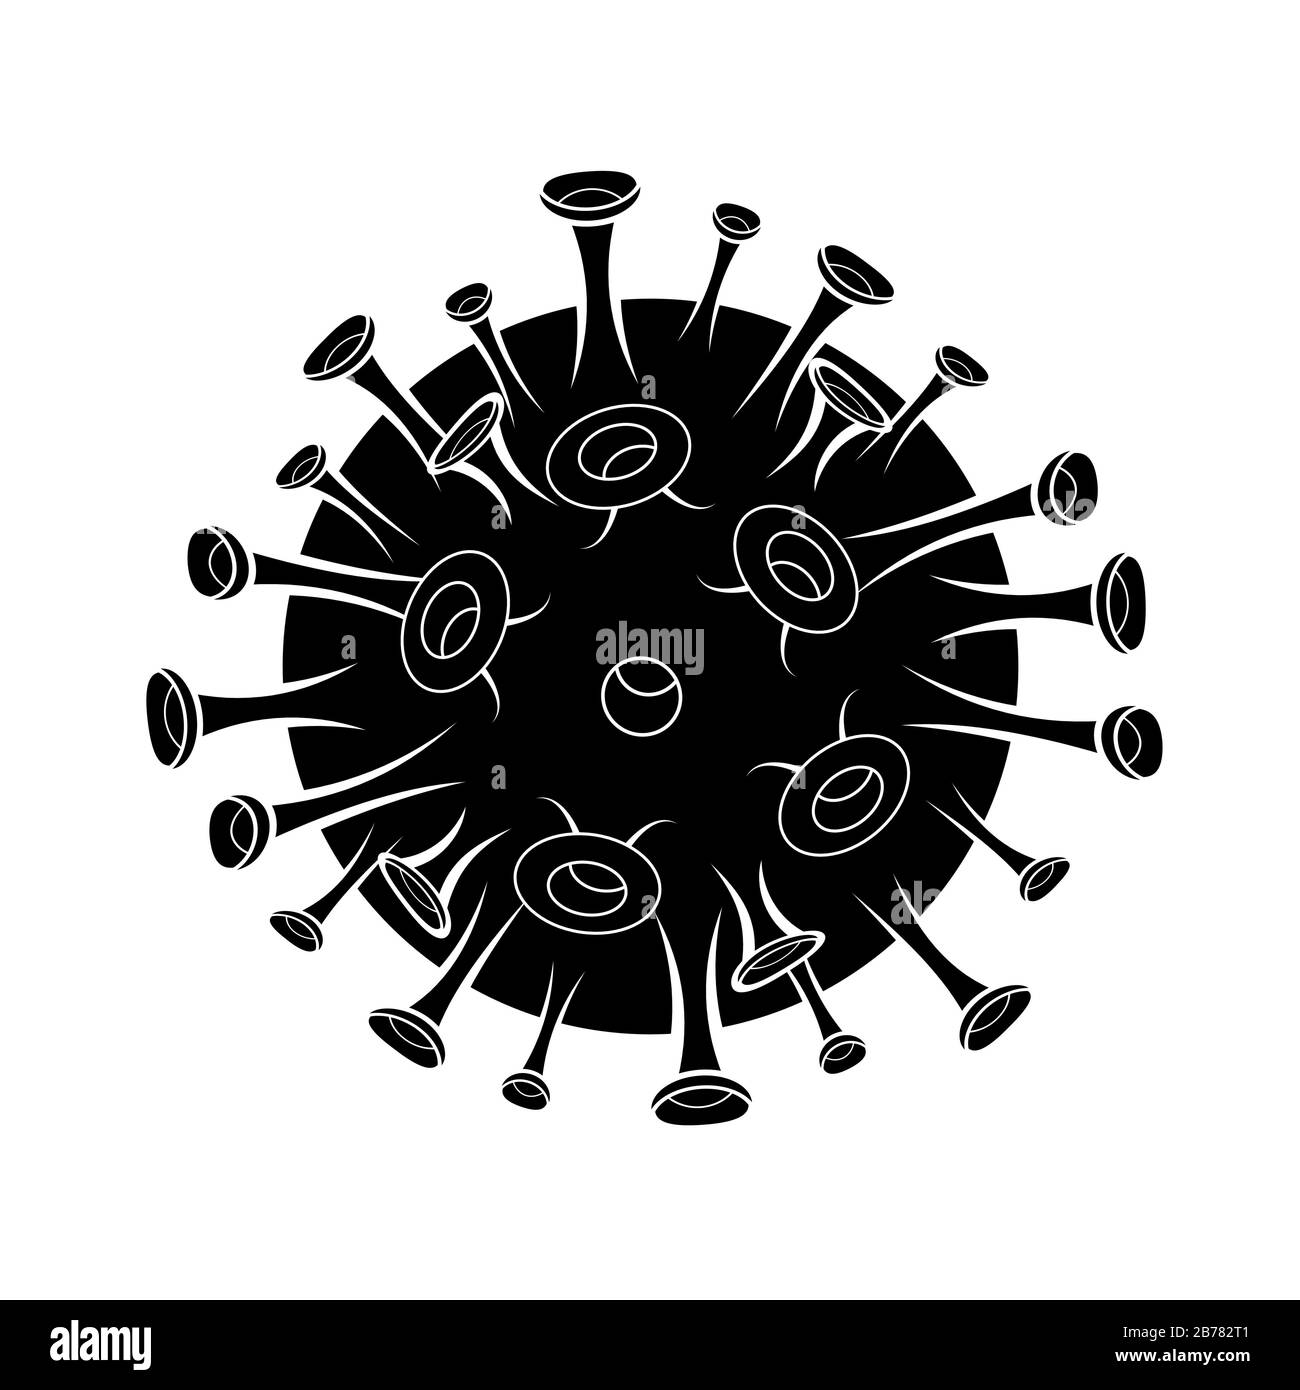 Coronavirus silhouette icon symbol design. illustration isolated on white background. Corona virus 2019-nCoV symptoms risk disease China medical healt Stock Vector